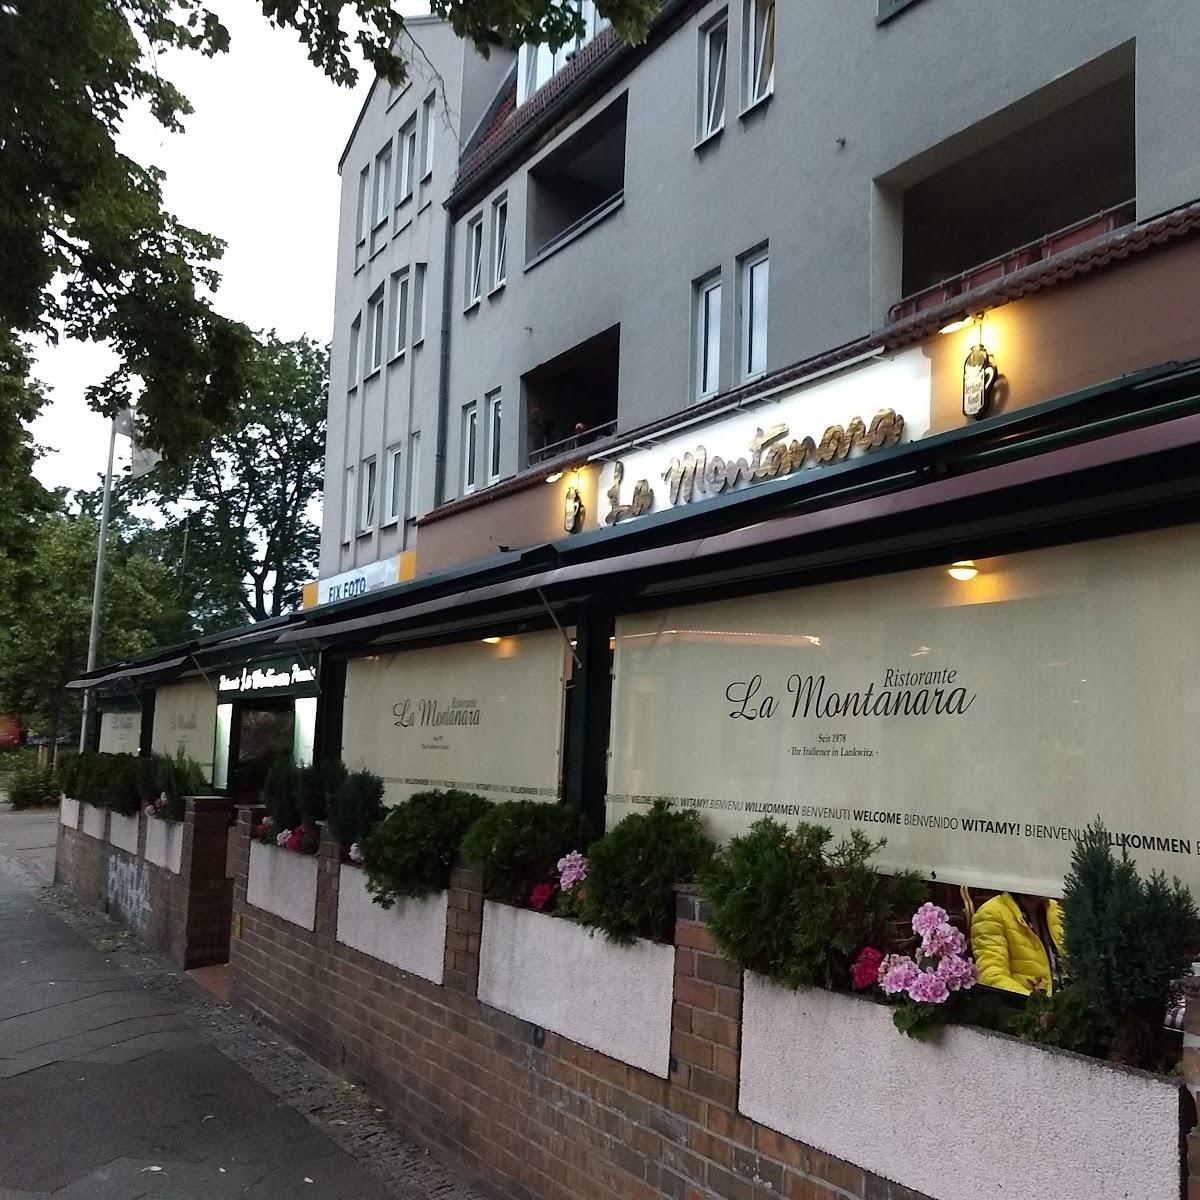 Restaurant "Ristorante La Montanara" in  Berlin